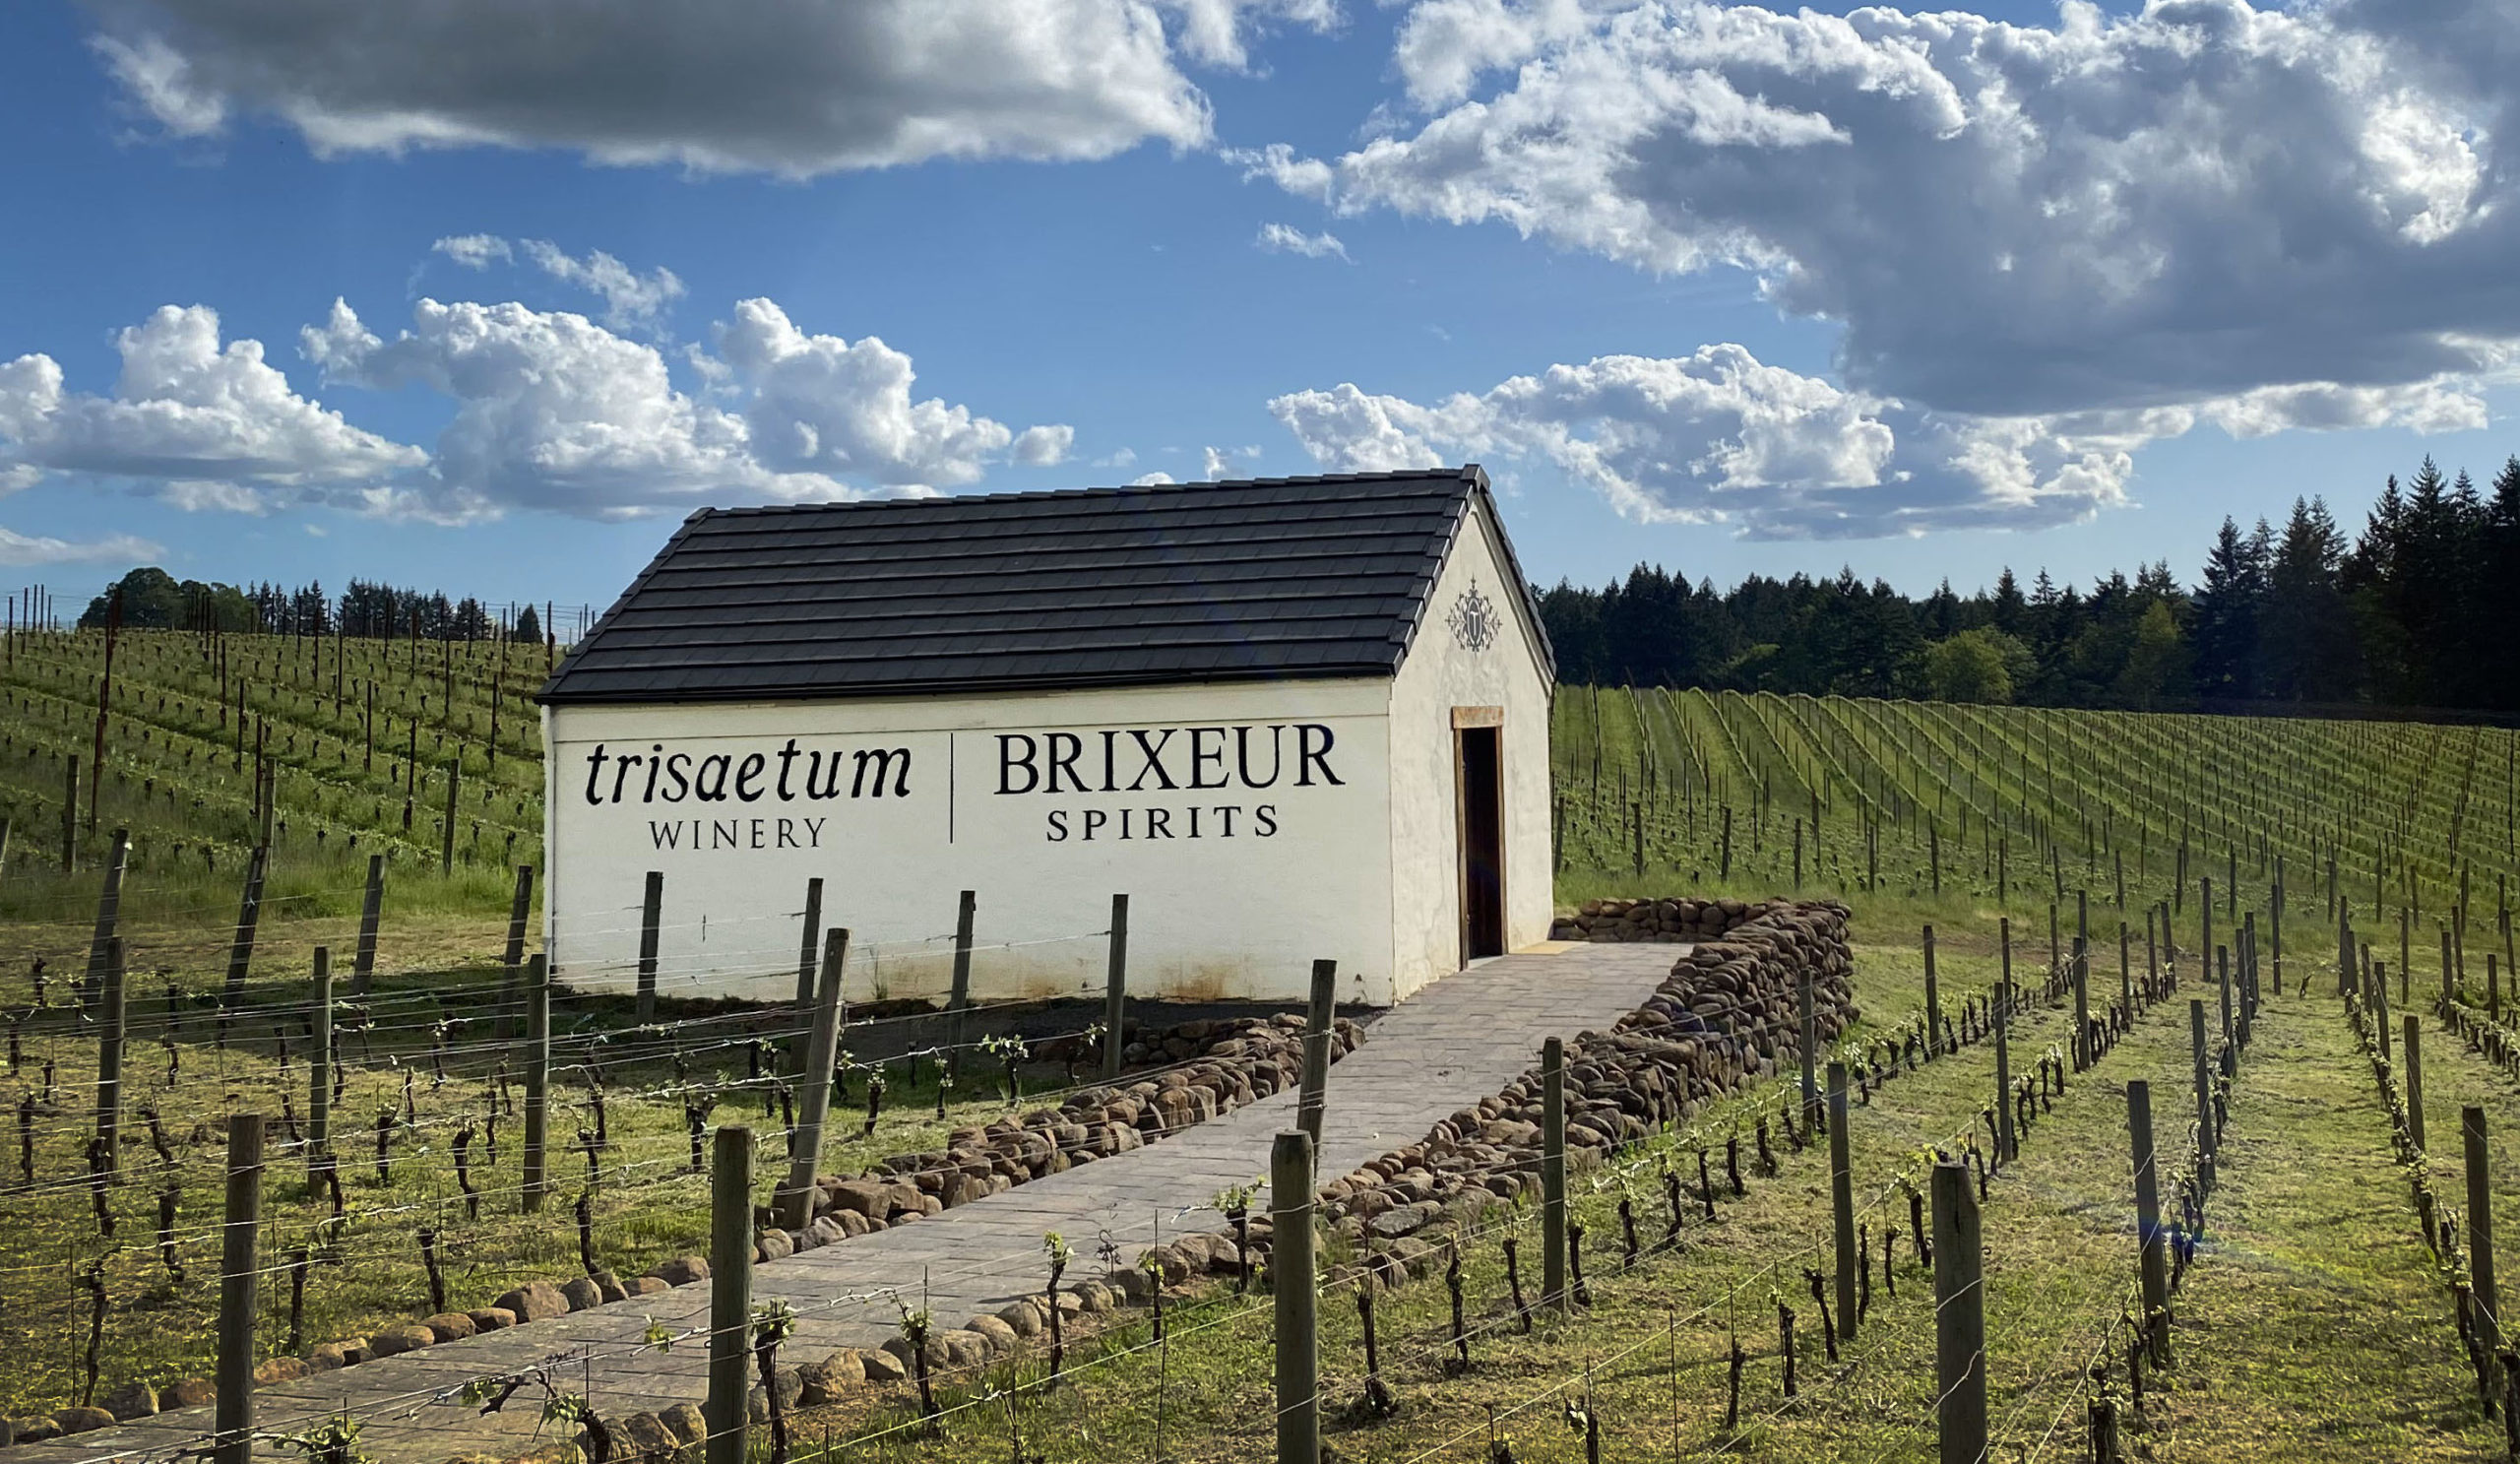 Trisaetum Winery & Brixeur Spirits